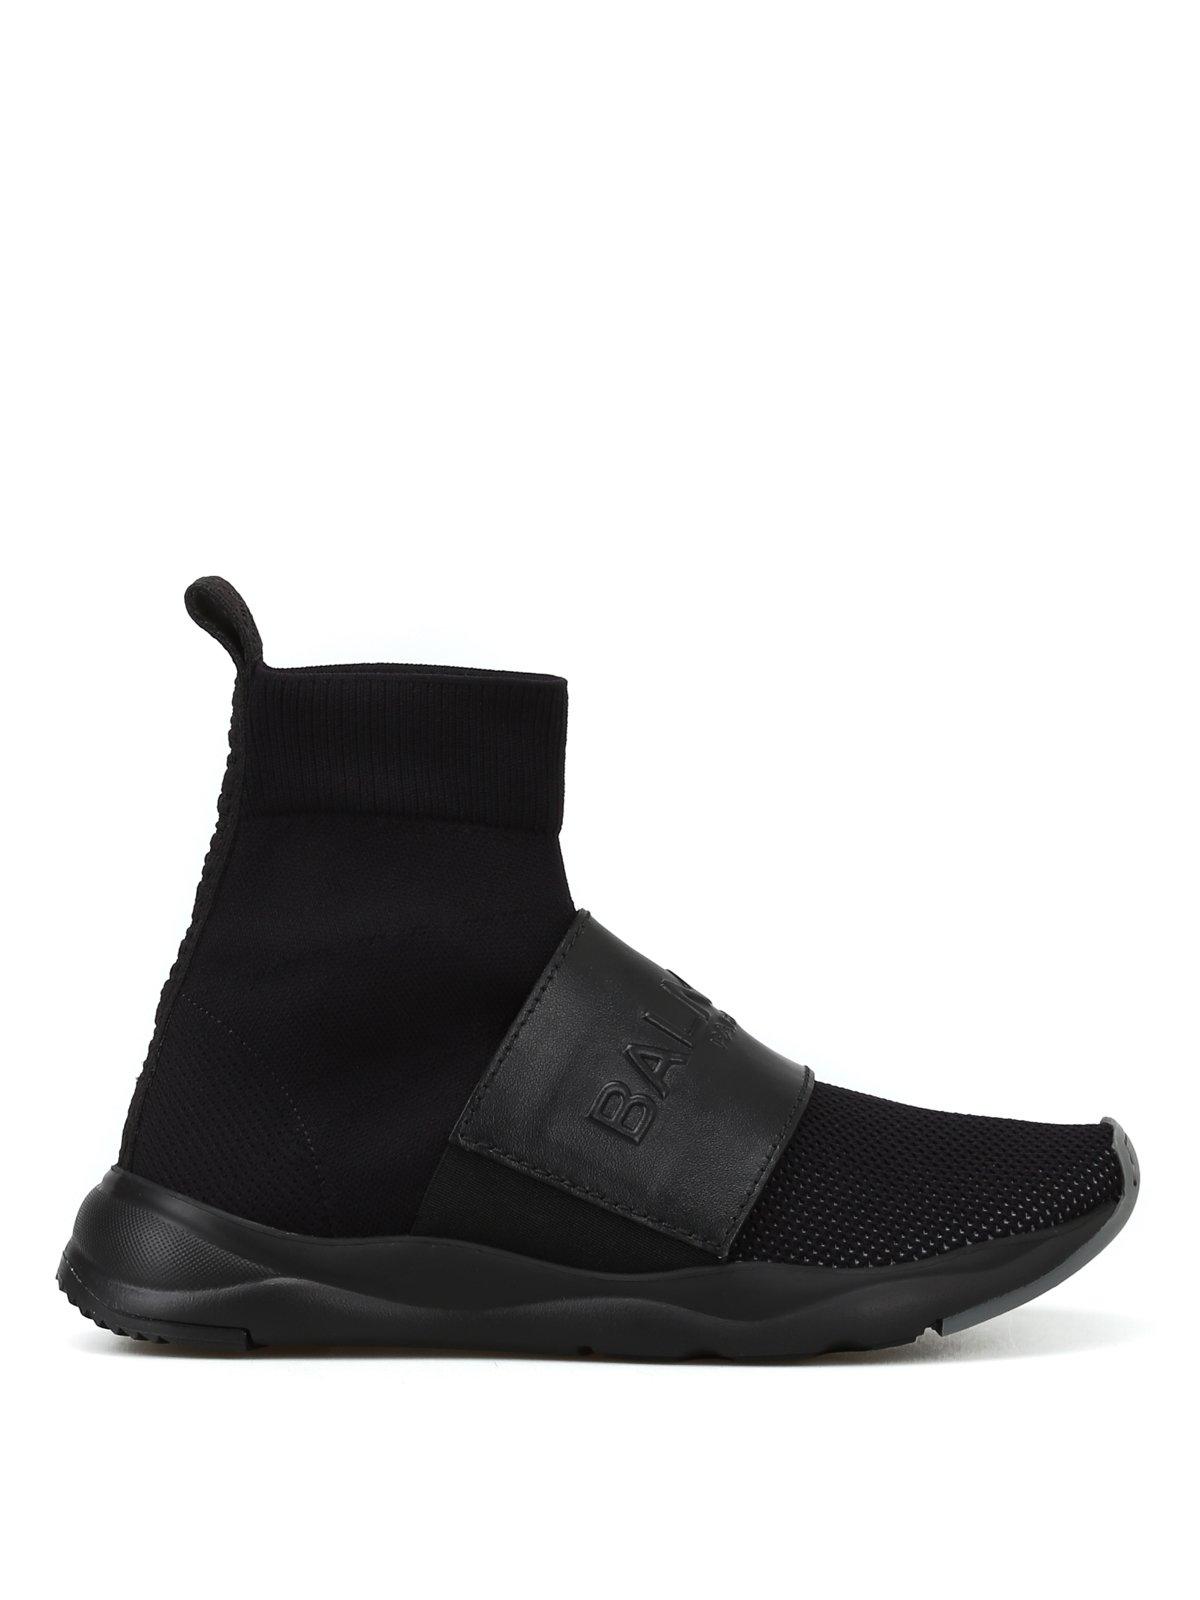 Balmain Logo Embossed Sock Sneakers in Black - Save 51% - Lyst